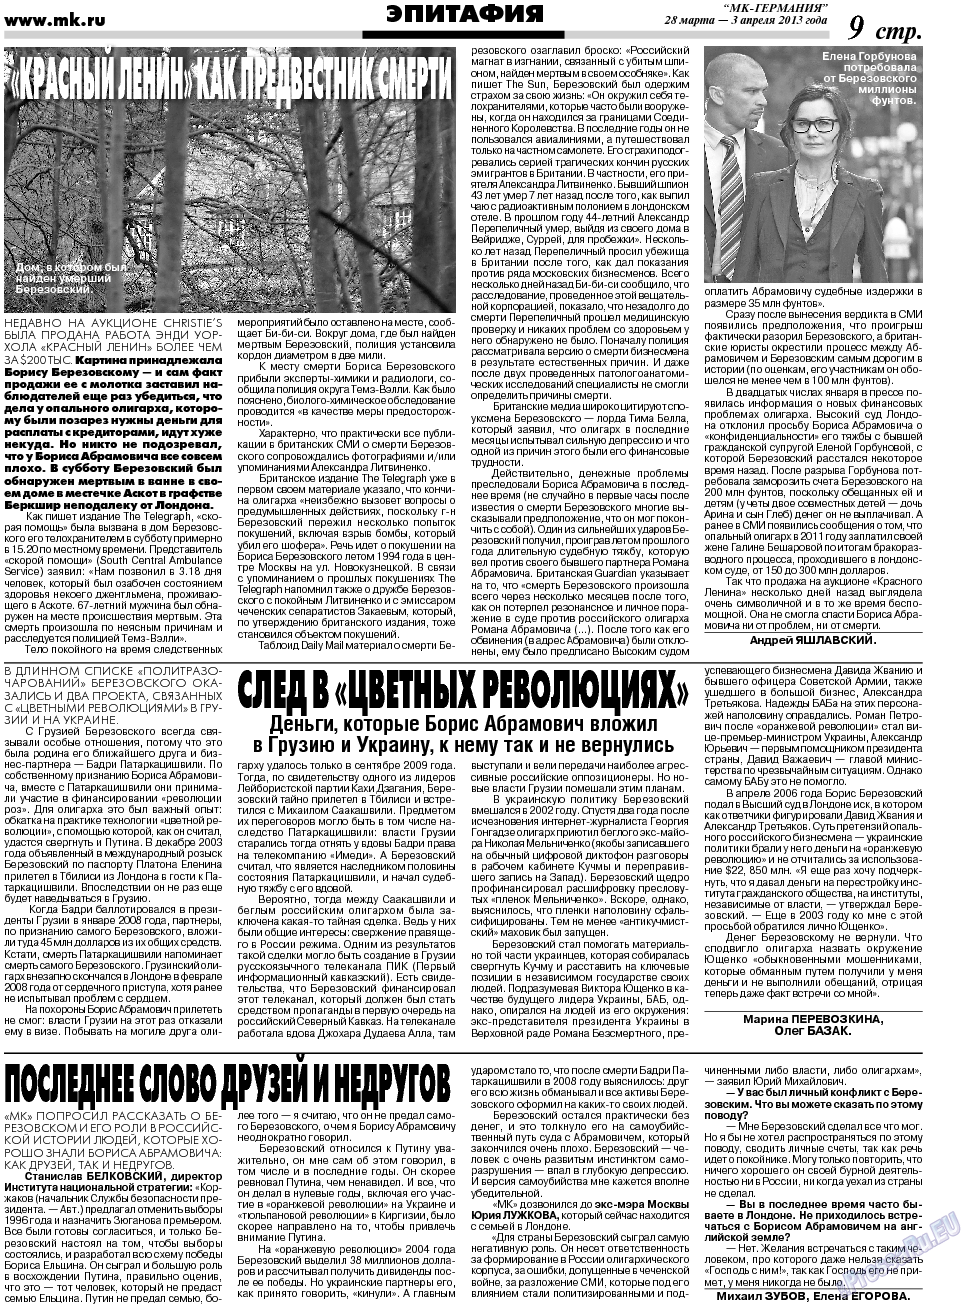 МК-Германия, газета. 2013 №13 стр.9